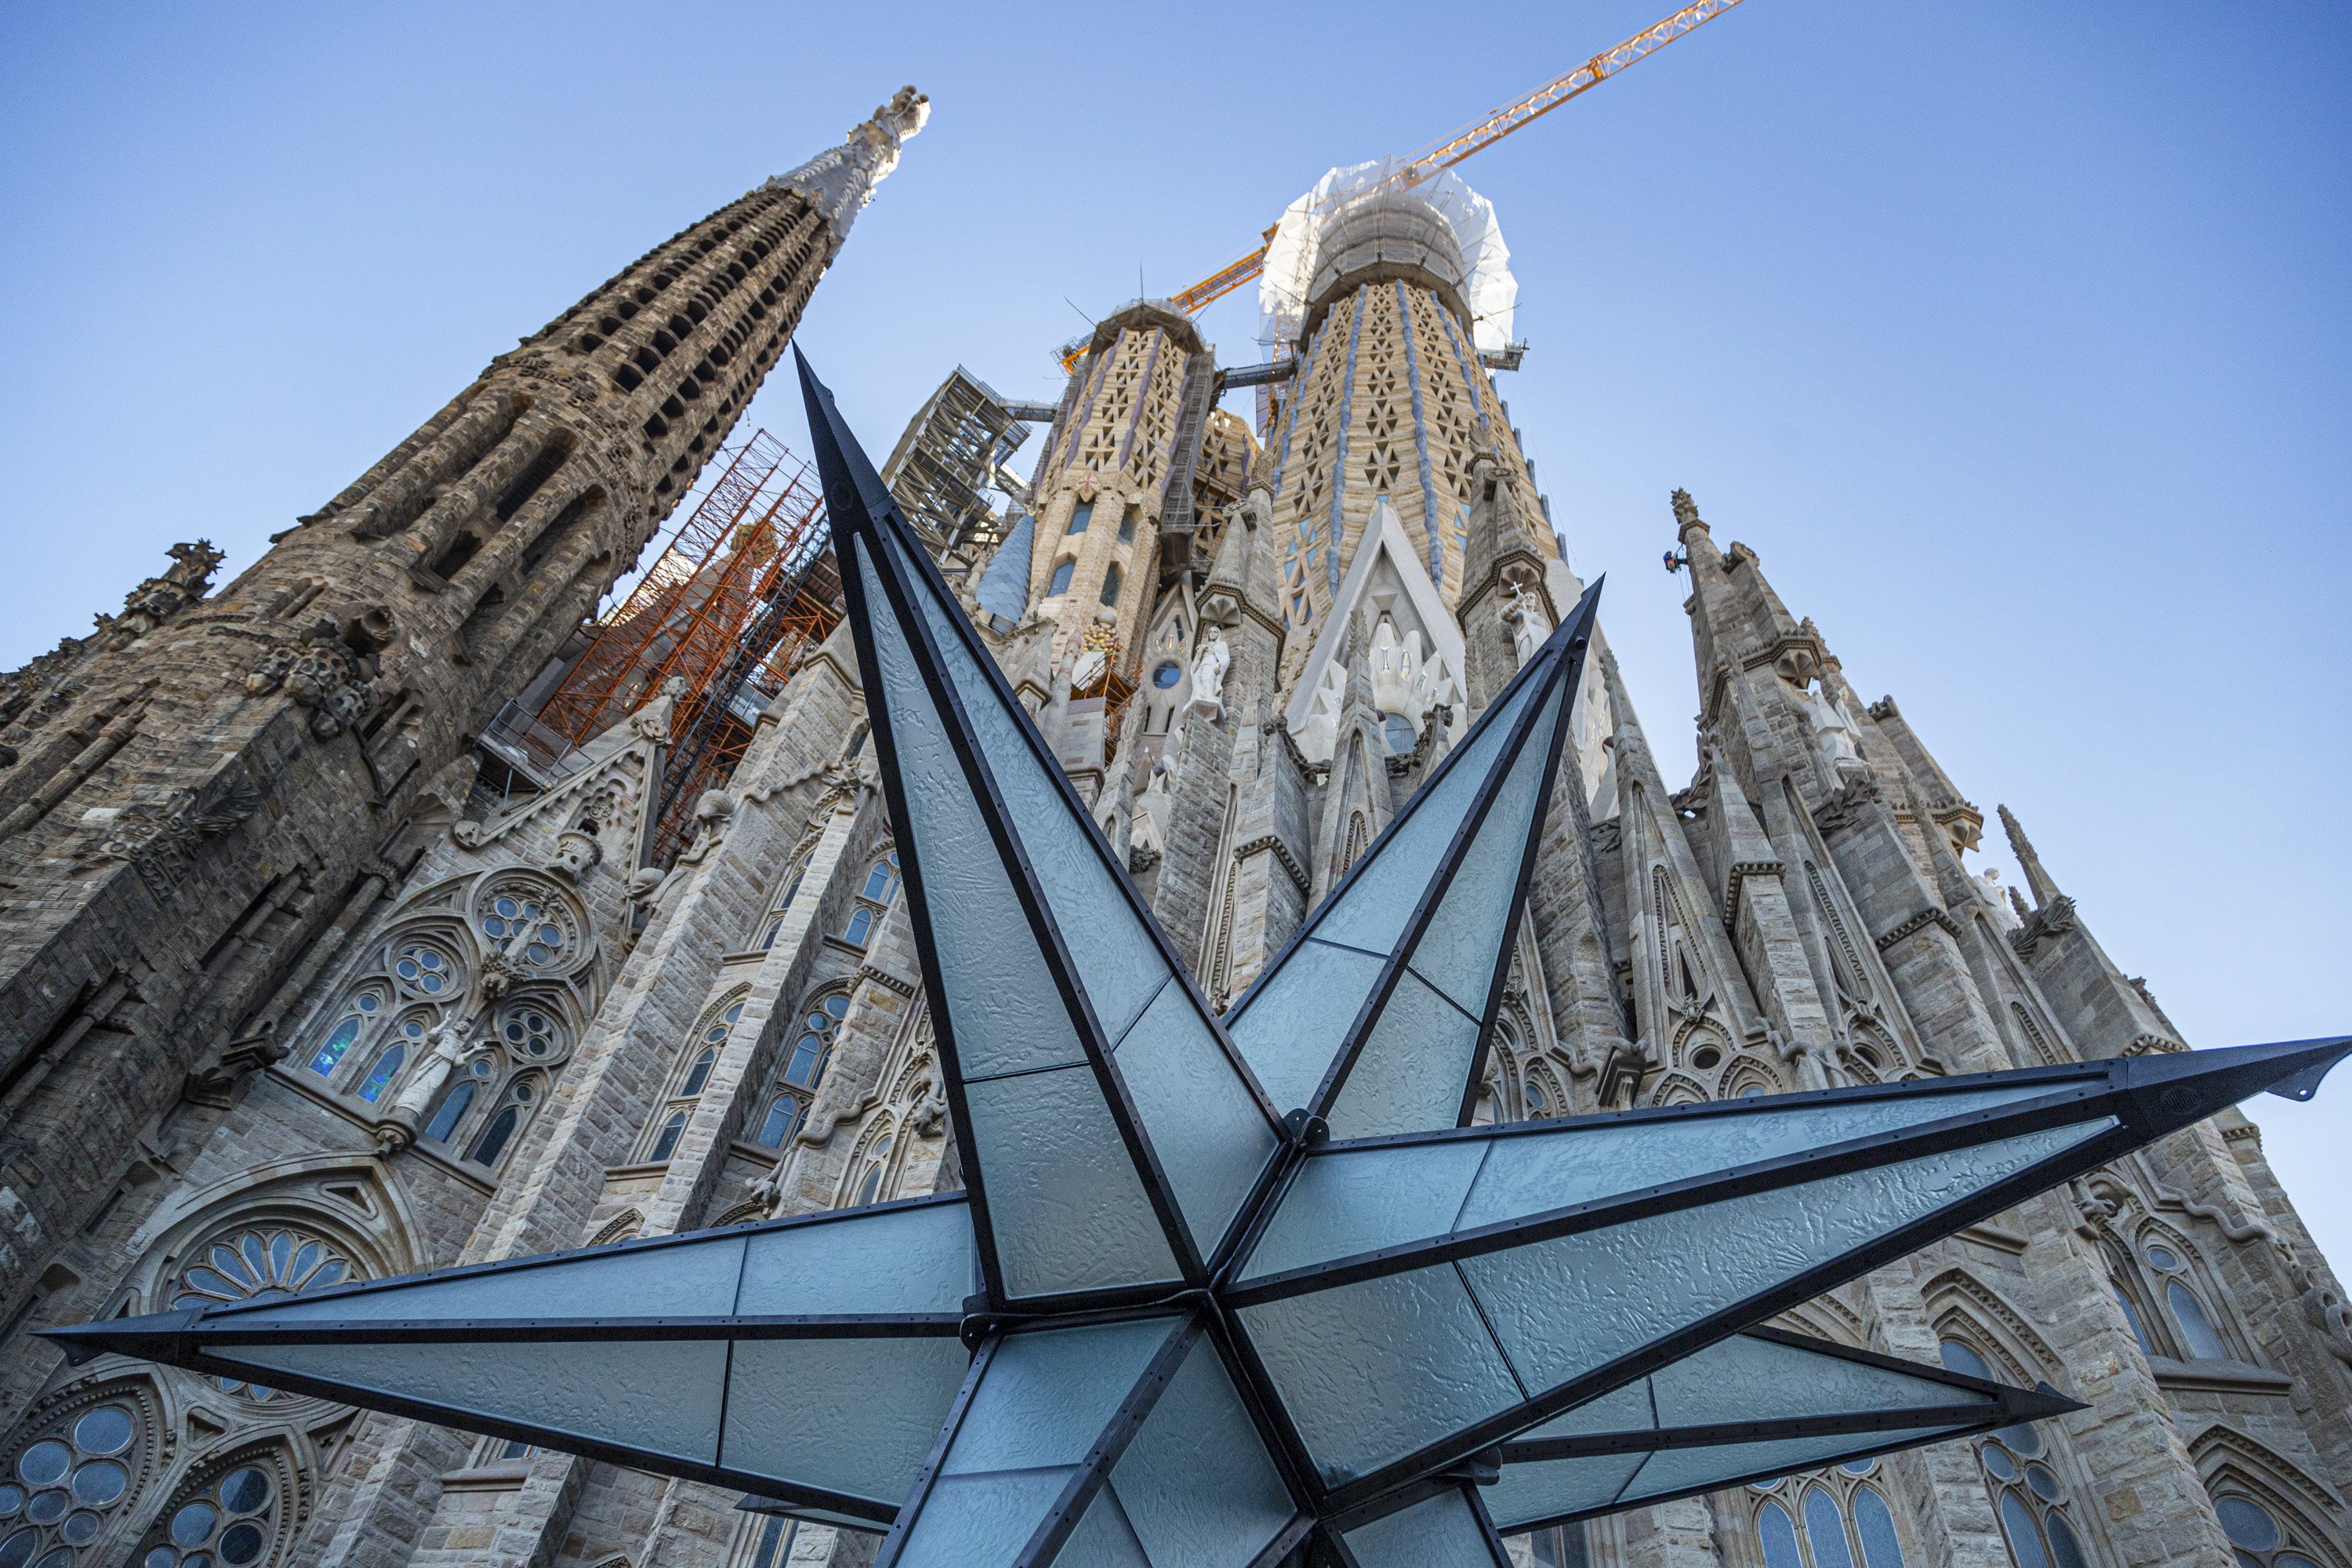 The Sagrada Família's new star will light up the Barcelona skyline on December 8th